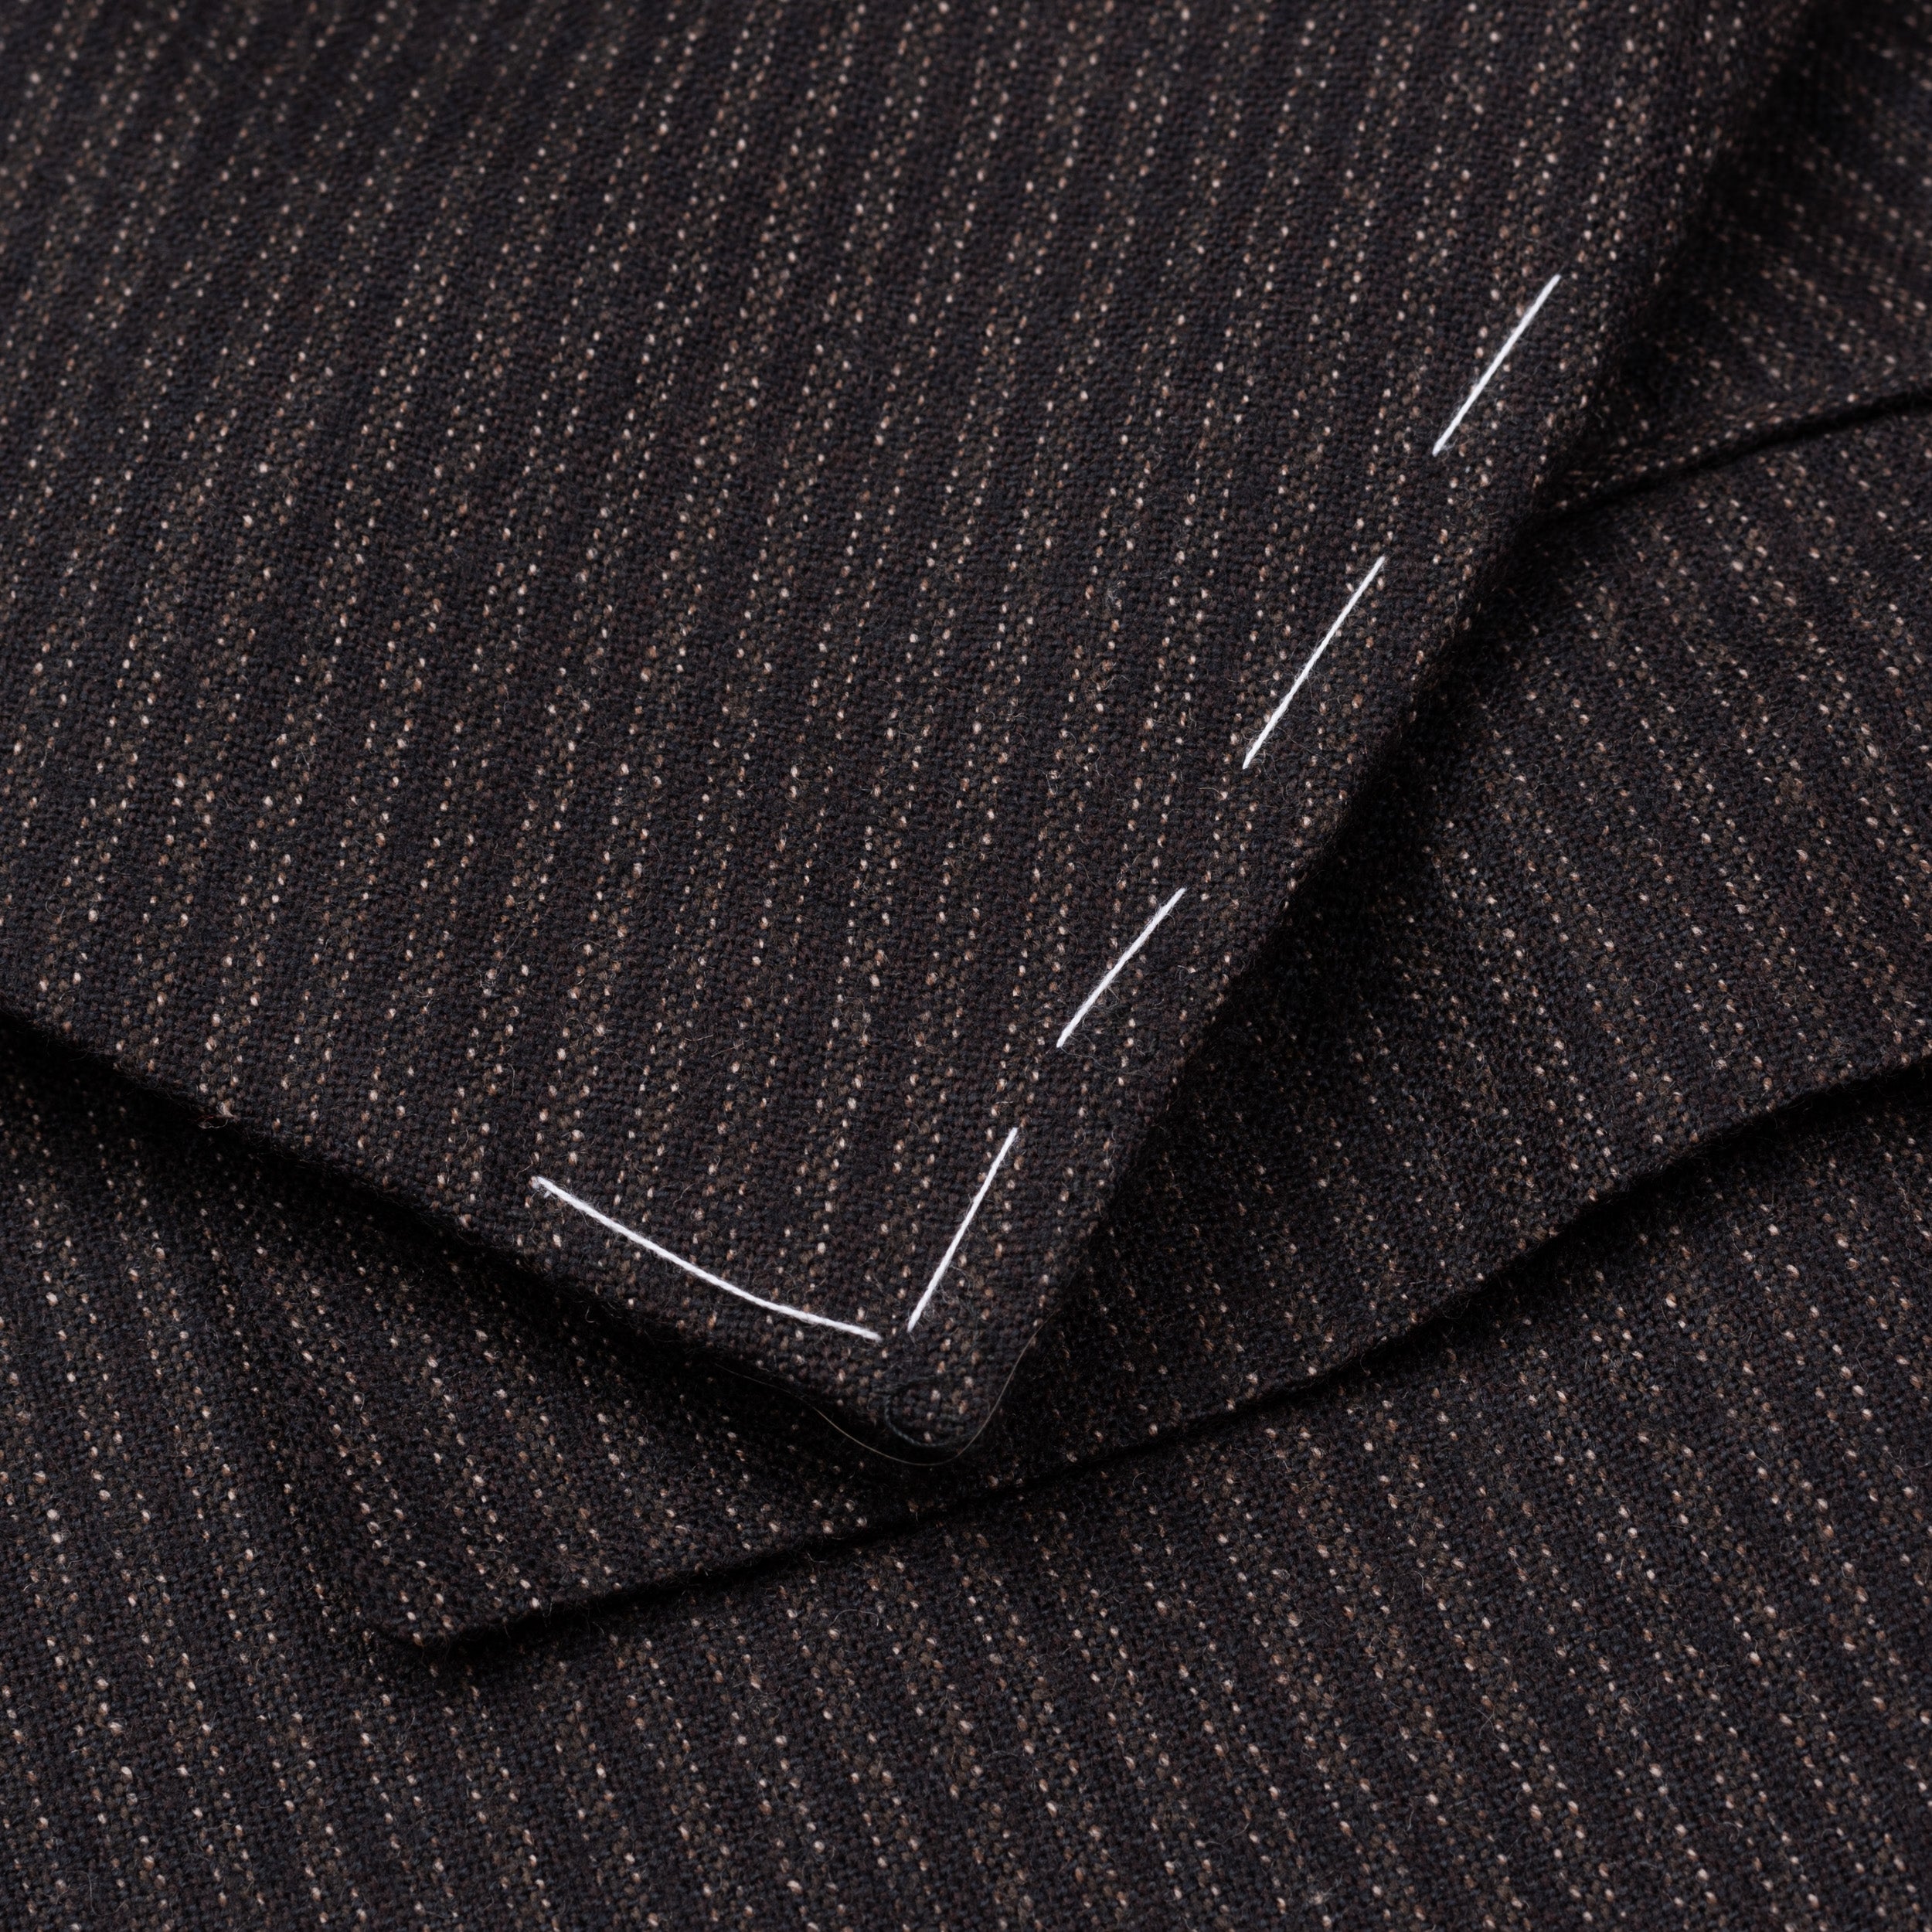 CESARE ATTOLINI Napoli Handmade Dark Brown Striped Wool Suit EU 52 NEW US 42 CESARE ATTOLINI